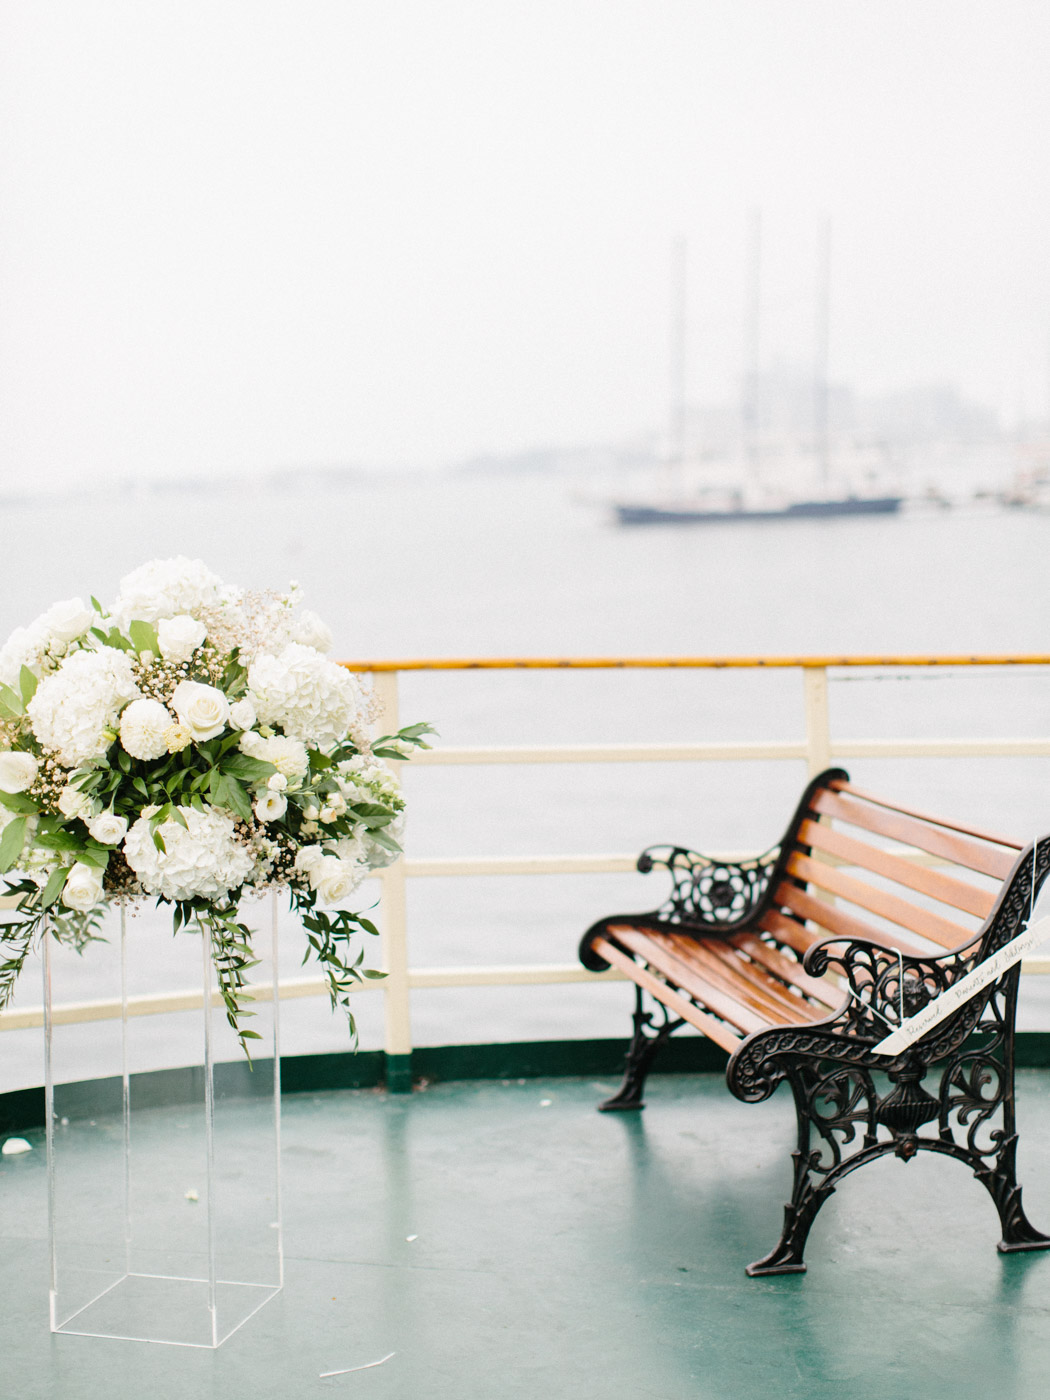 corynn_fowler_photography_toronto_wedding_boat_harbourfont-203.jpg